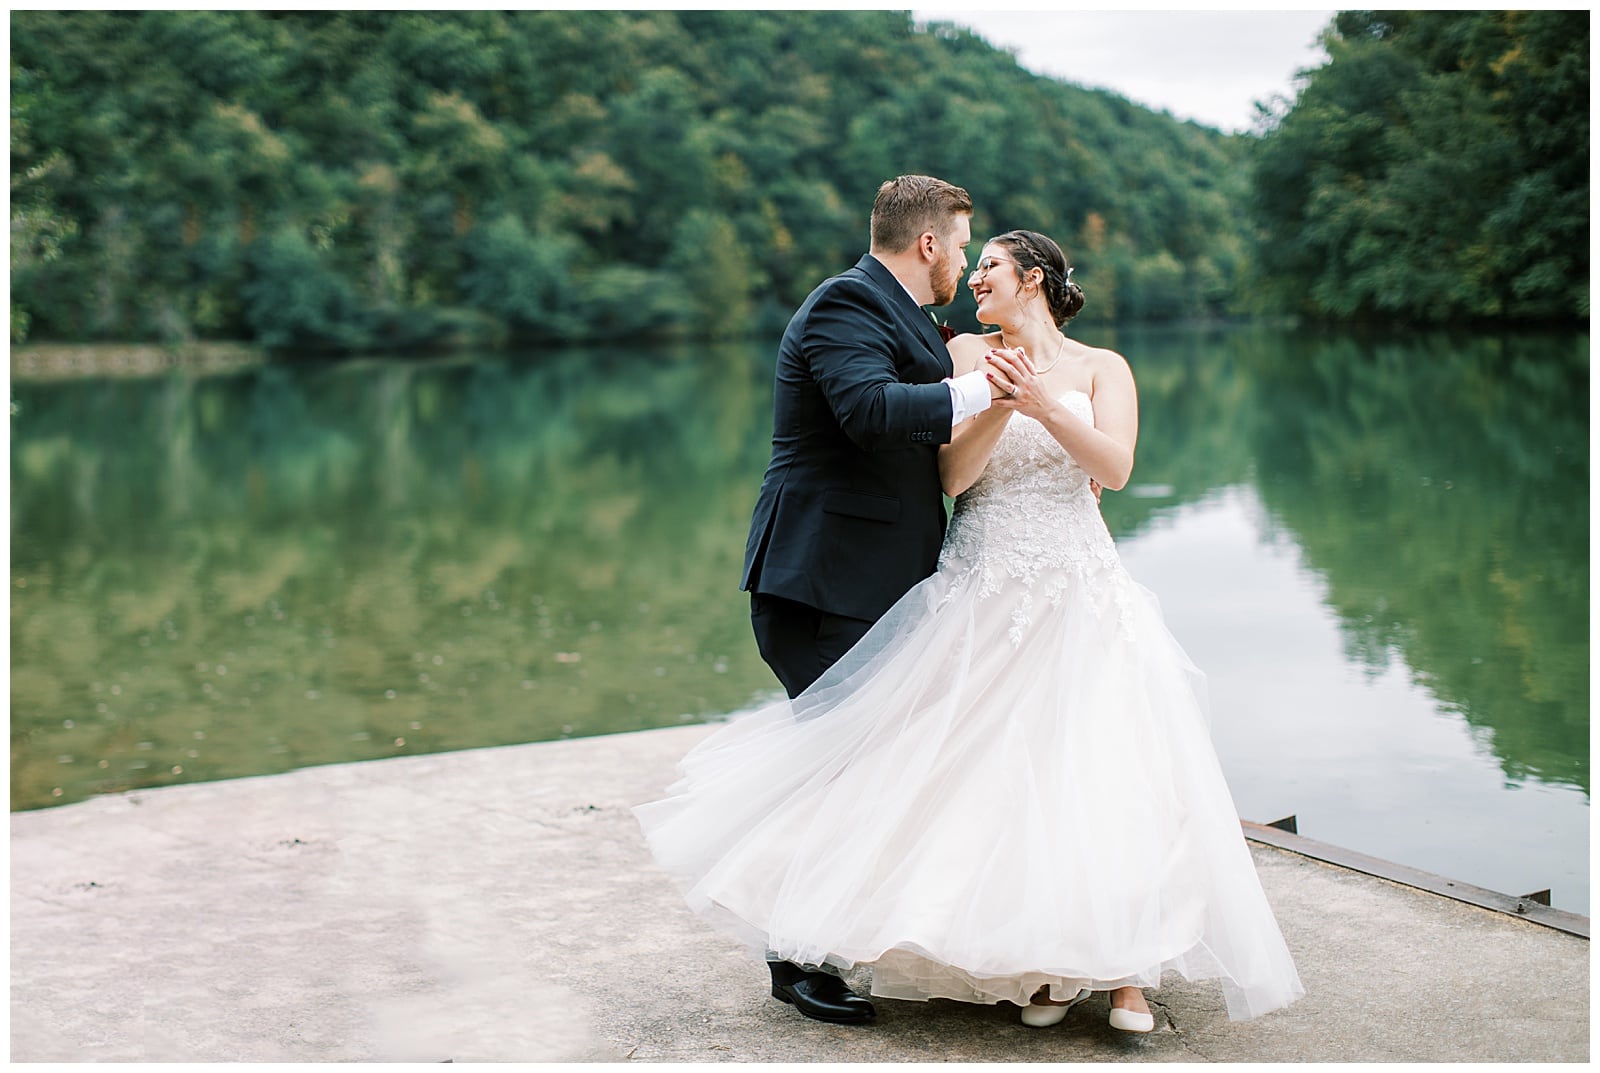 Danielle-Defayette-Photography-Steele-Creek-Park-Wedding_0043.jpg